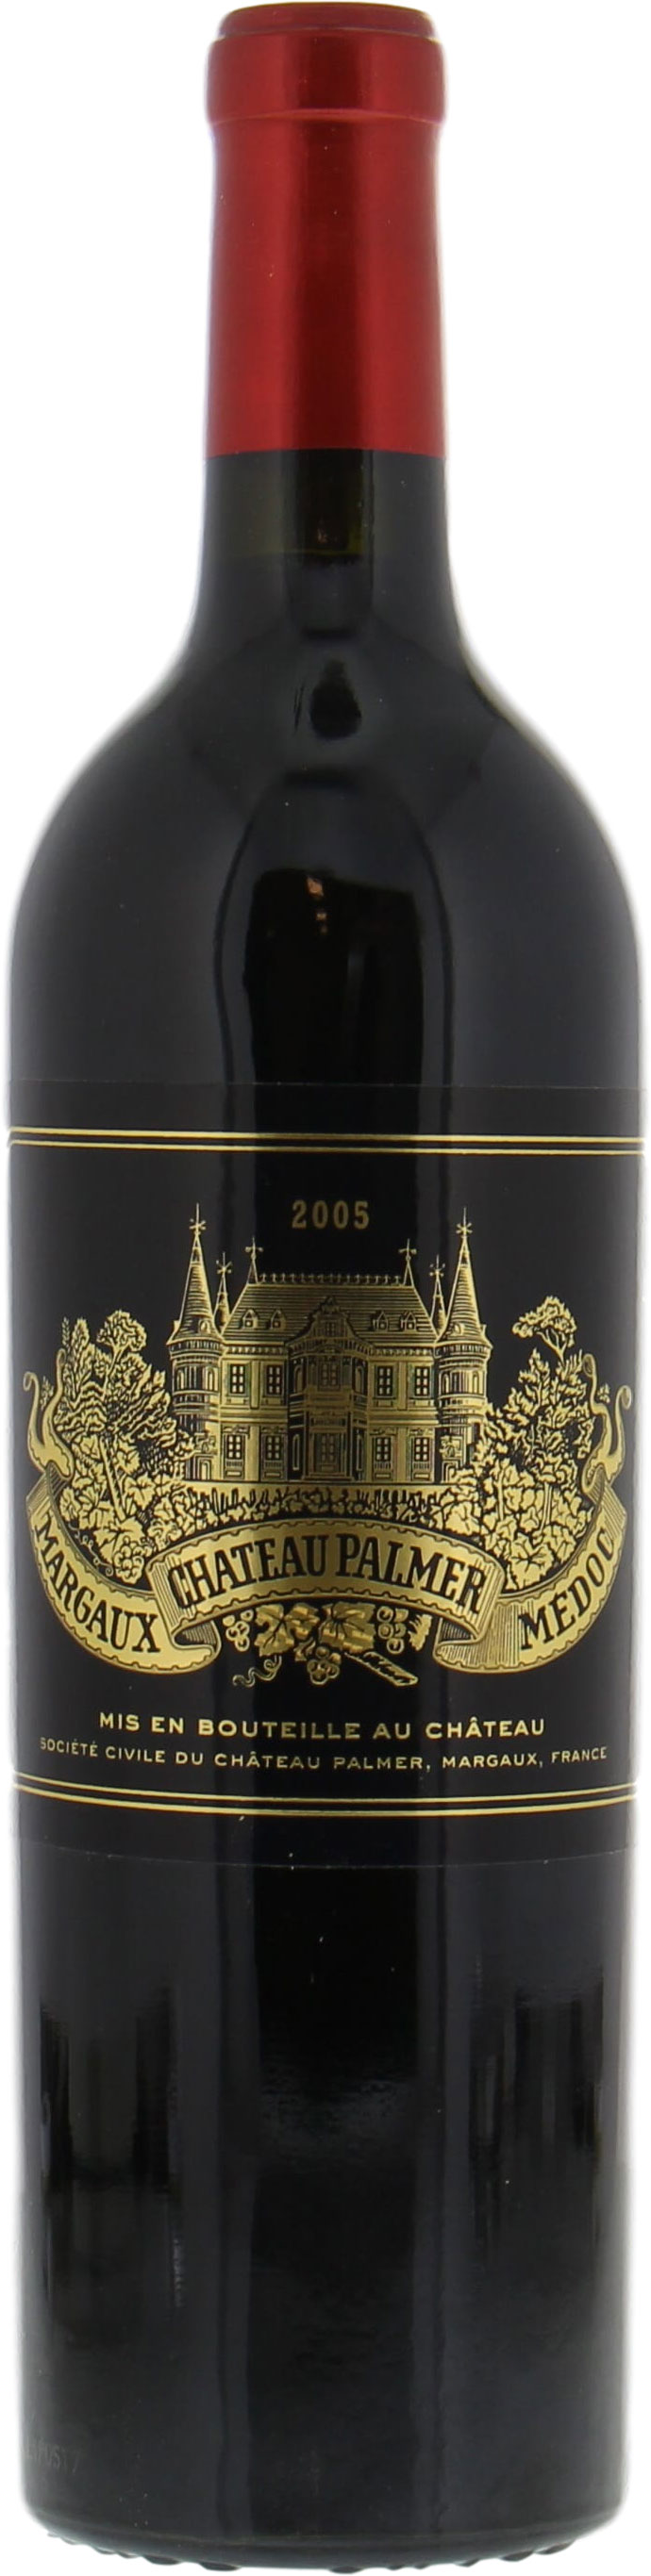 Chateau Palmer - Chateau Palmer 2005